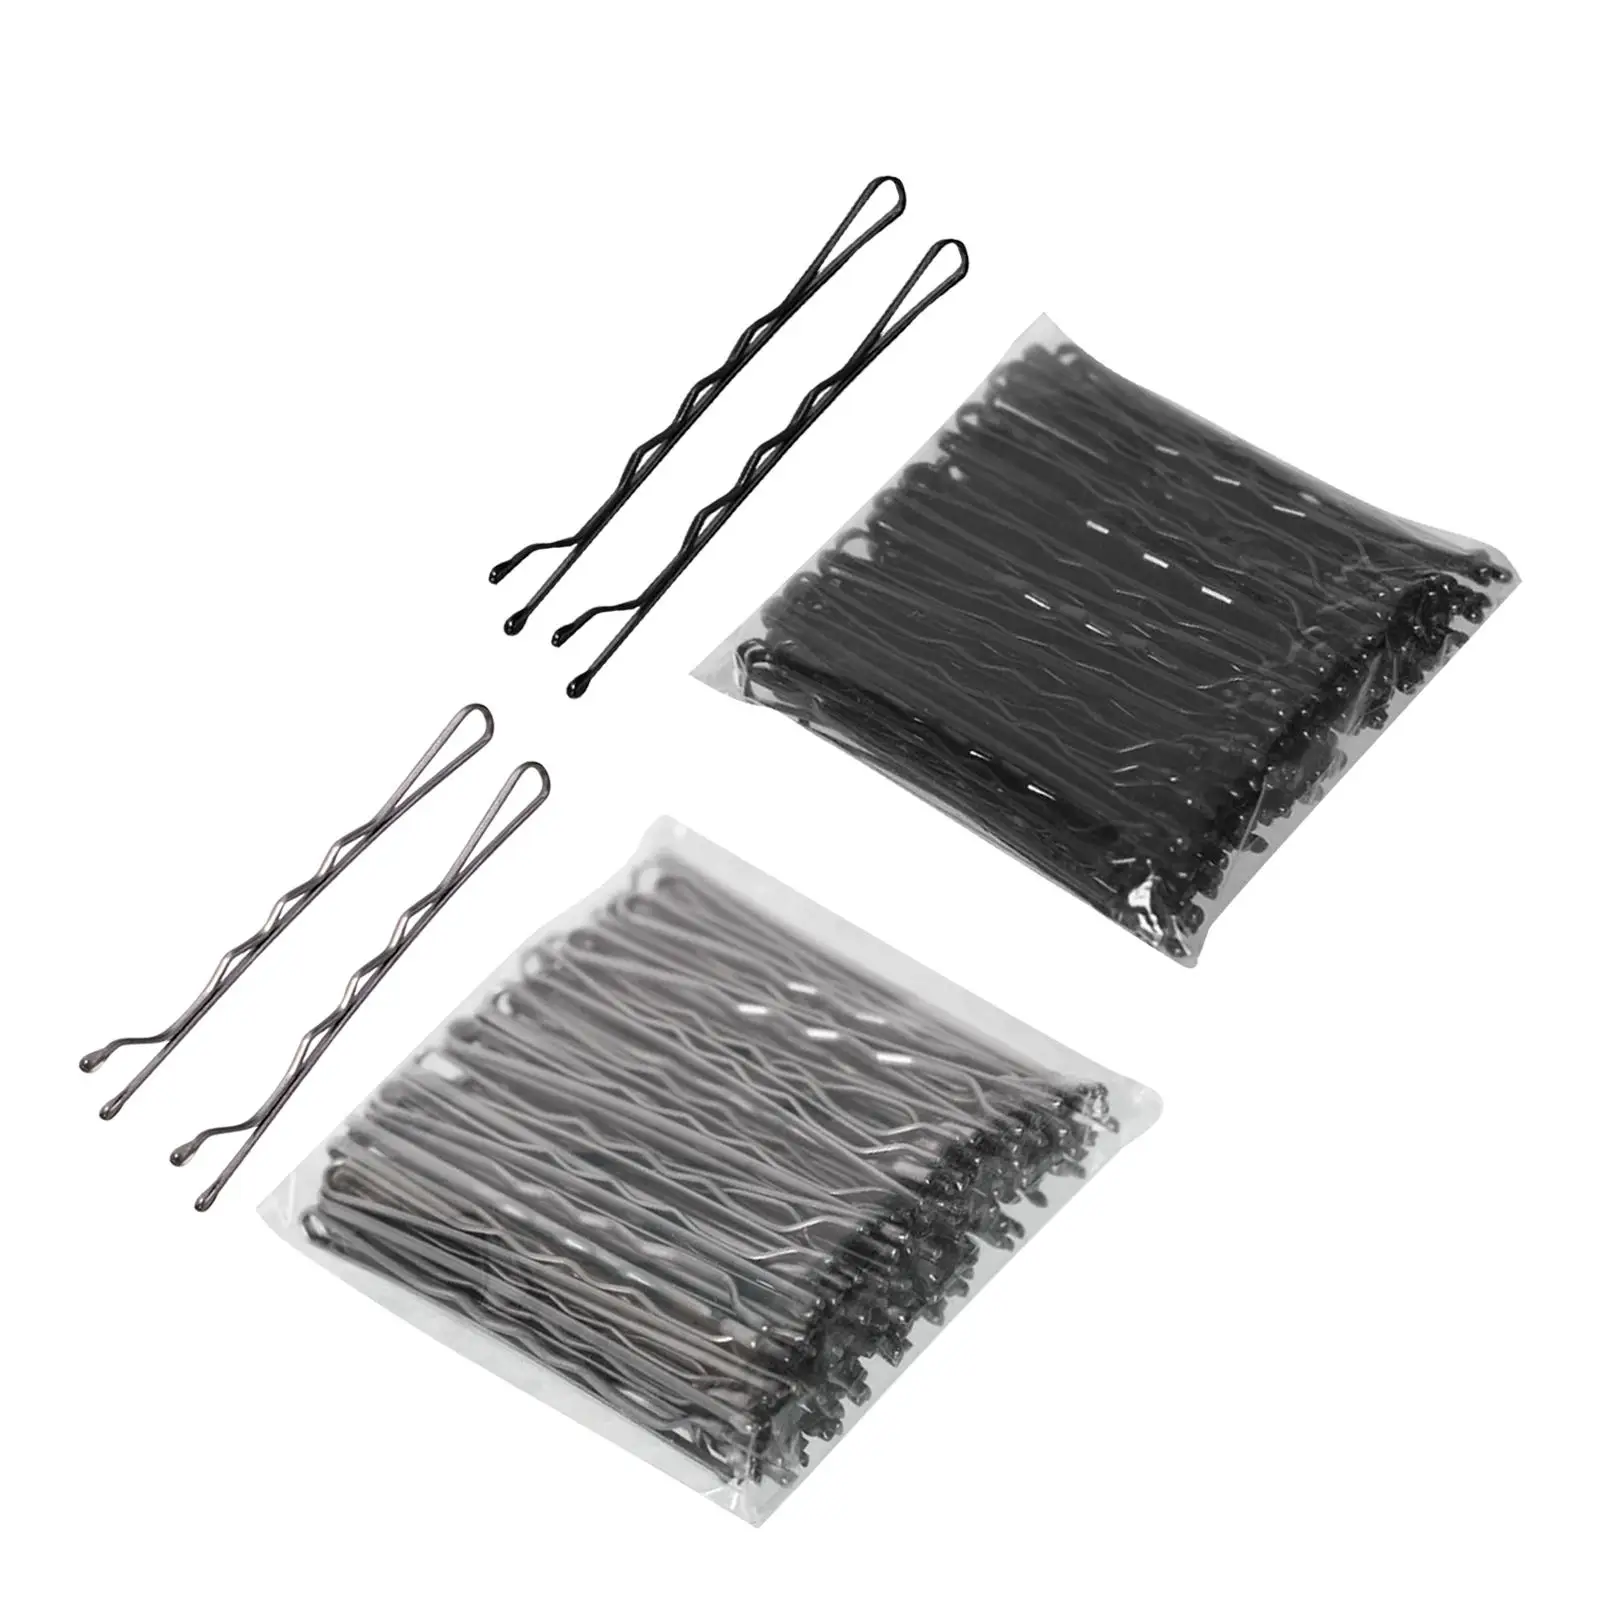 100x Hair Pin Keep Hairs in Place Metal Hair Accessories for Salon Girls